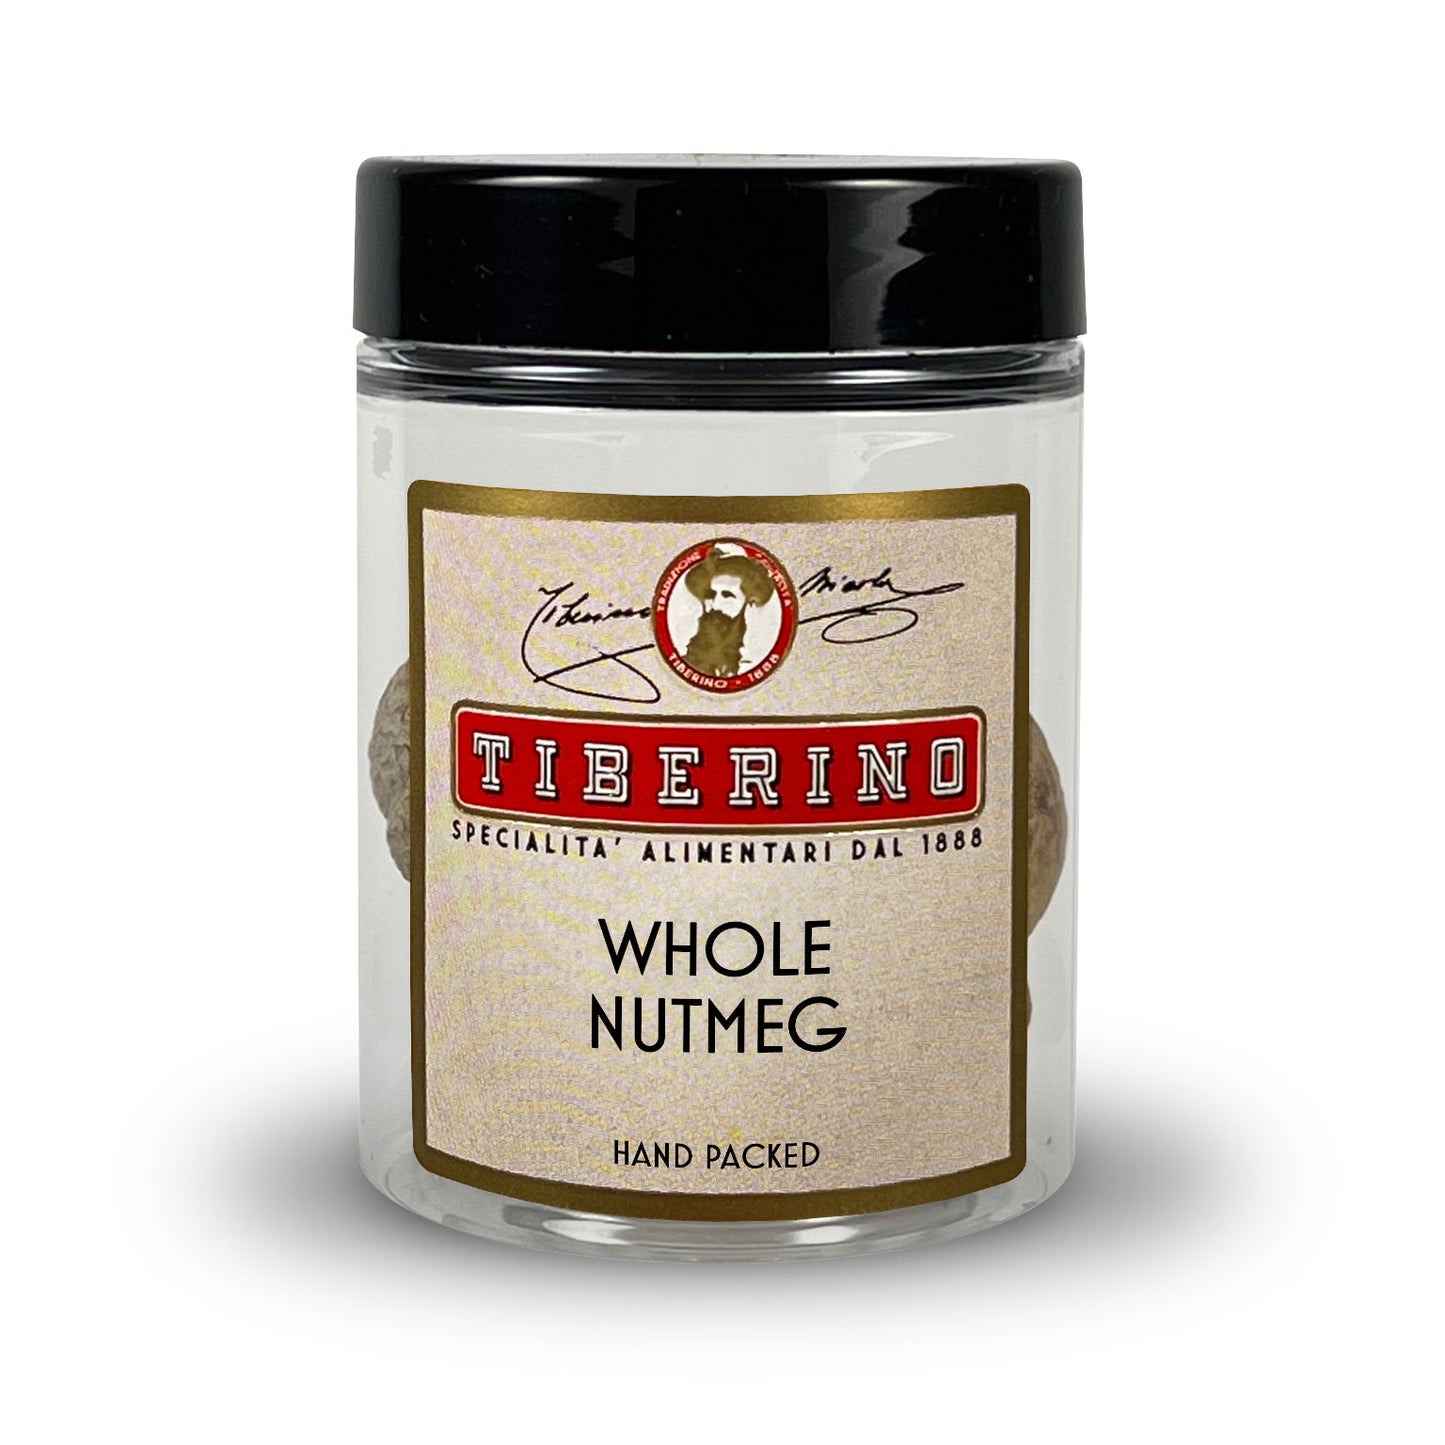 Whole nutmegs